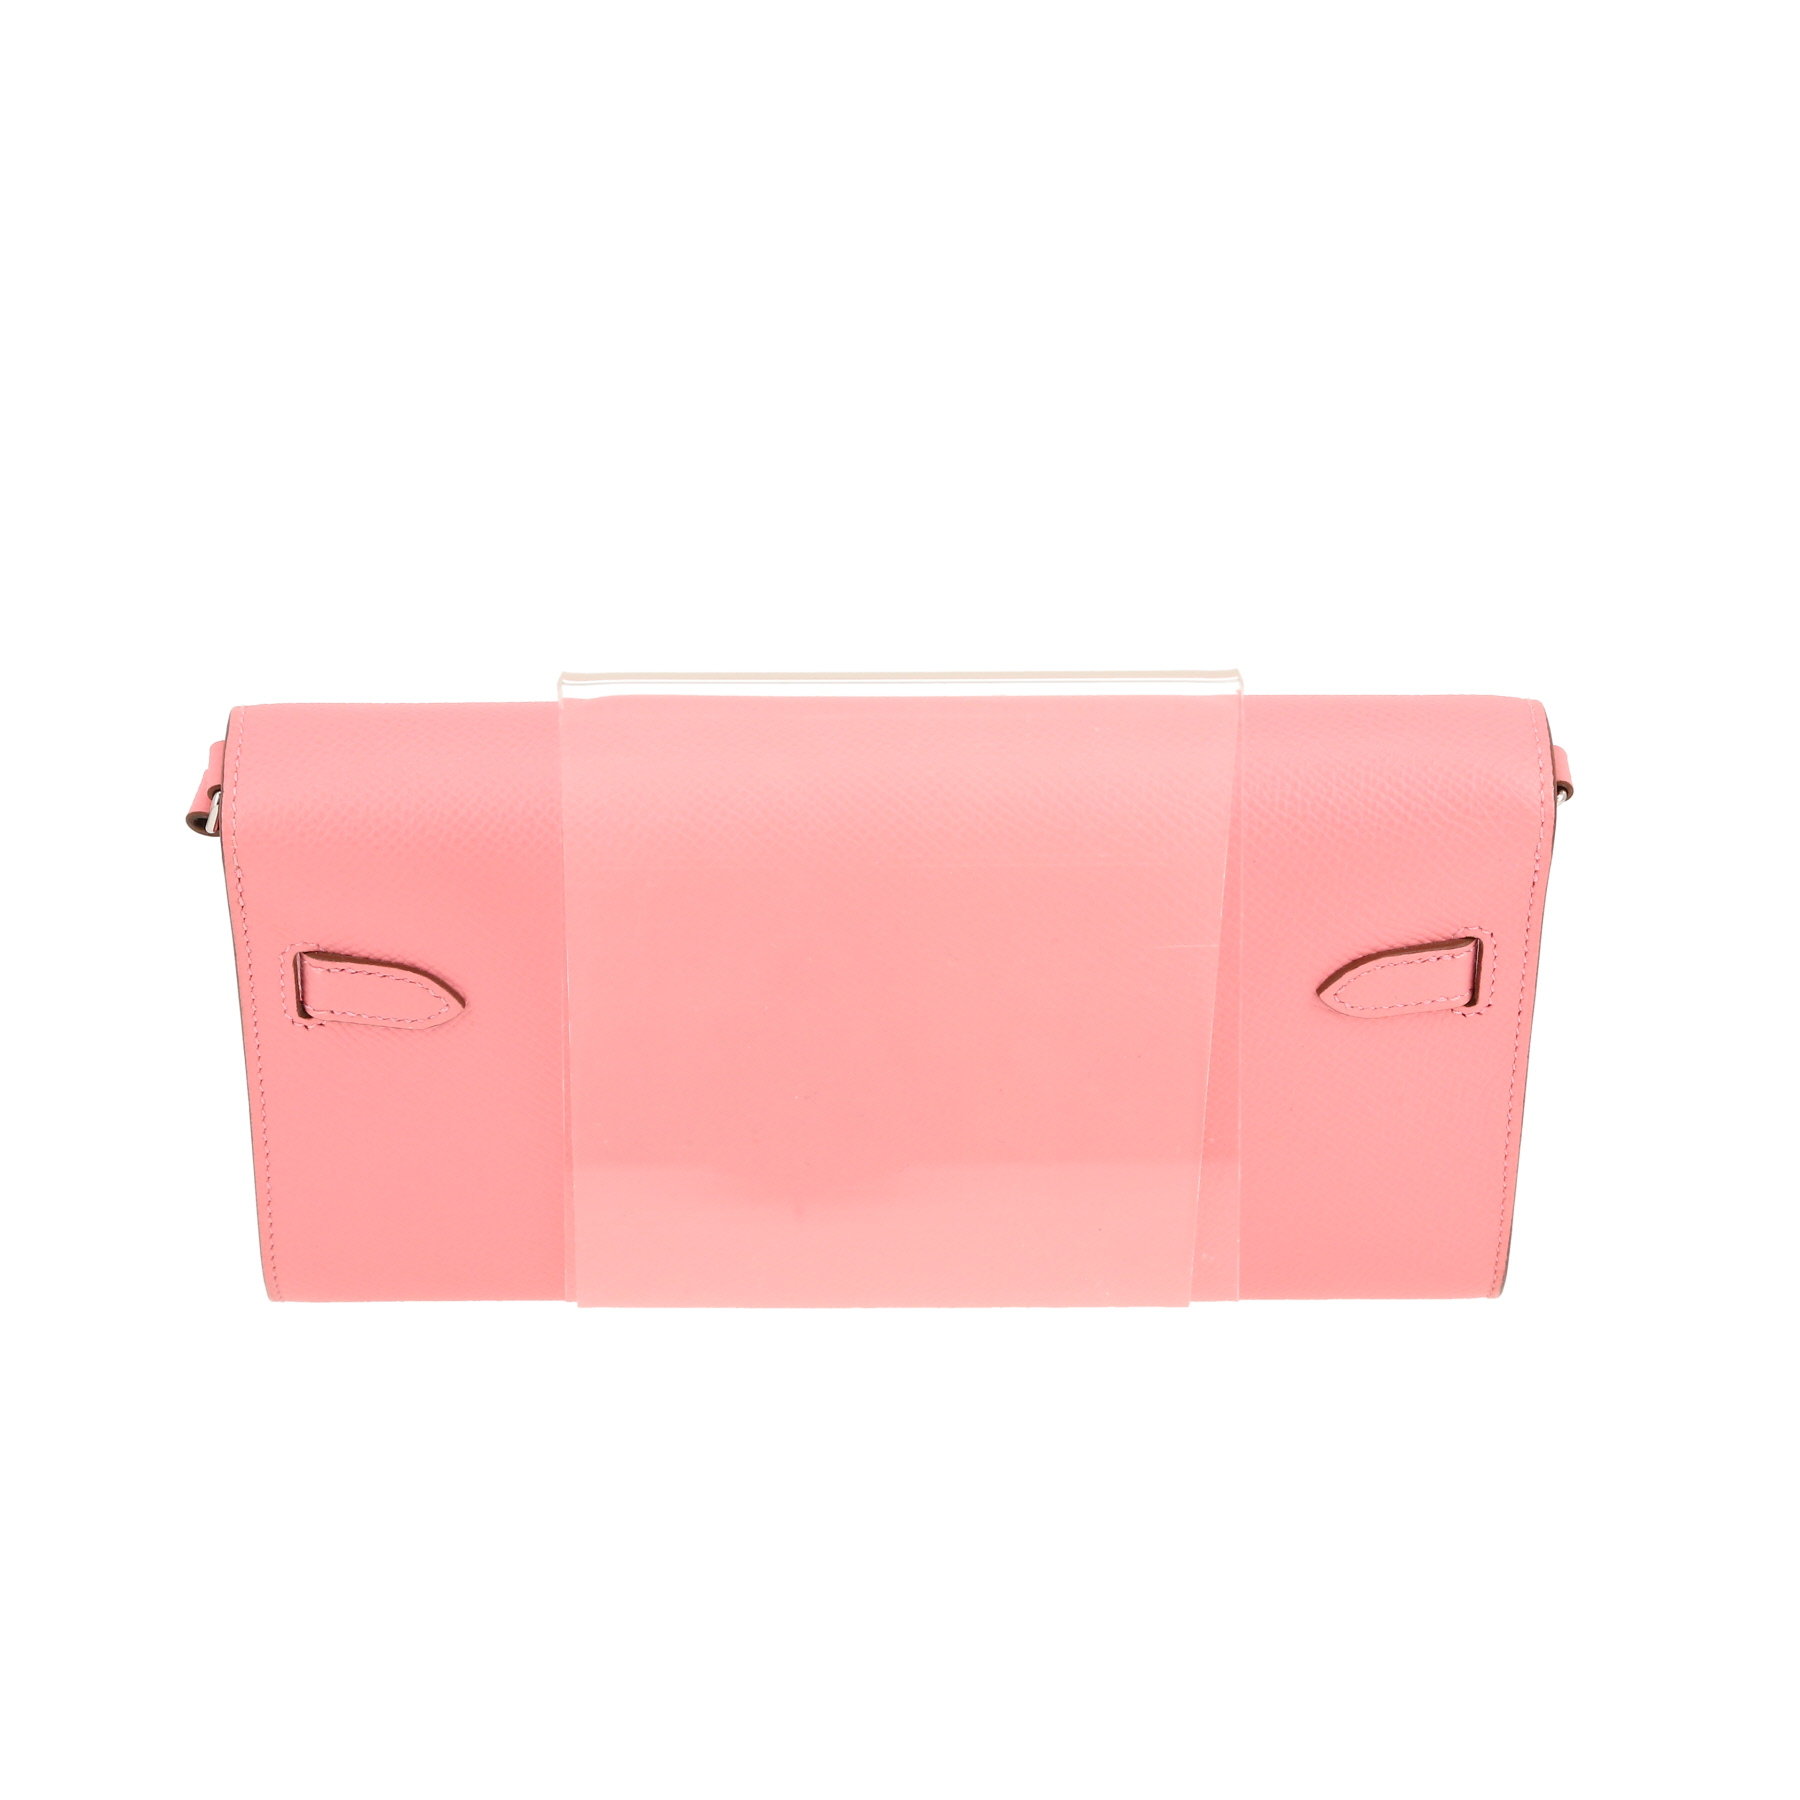 Kelly To Go Handbag/Clutch In Rose Confetti Epsom Leather